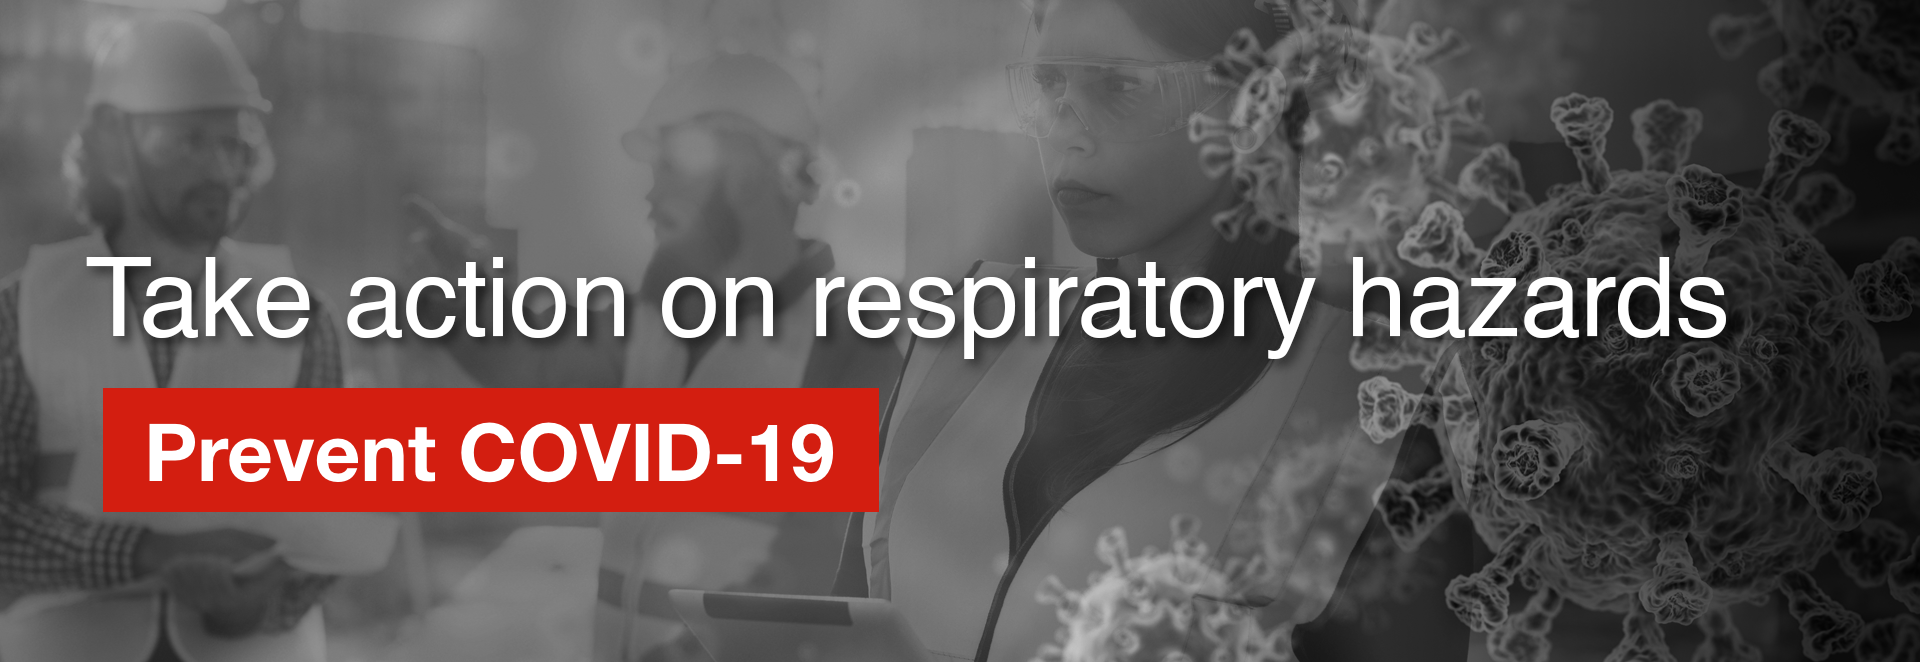 Take action on respiratory hazards | Prevent COVID-19